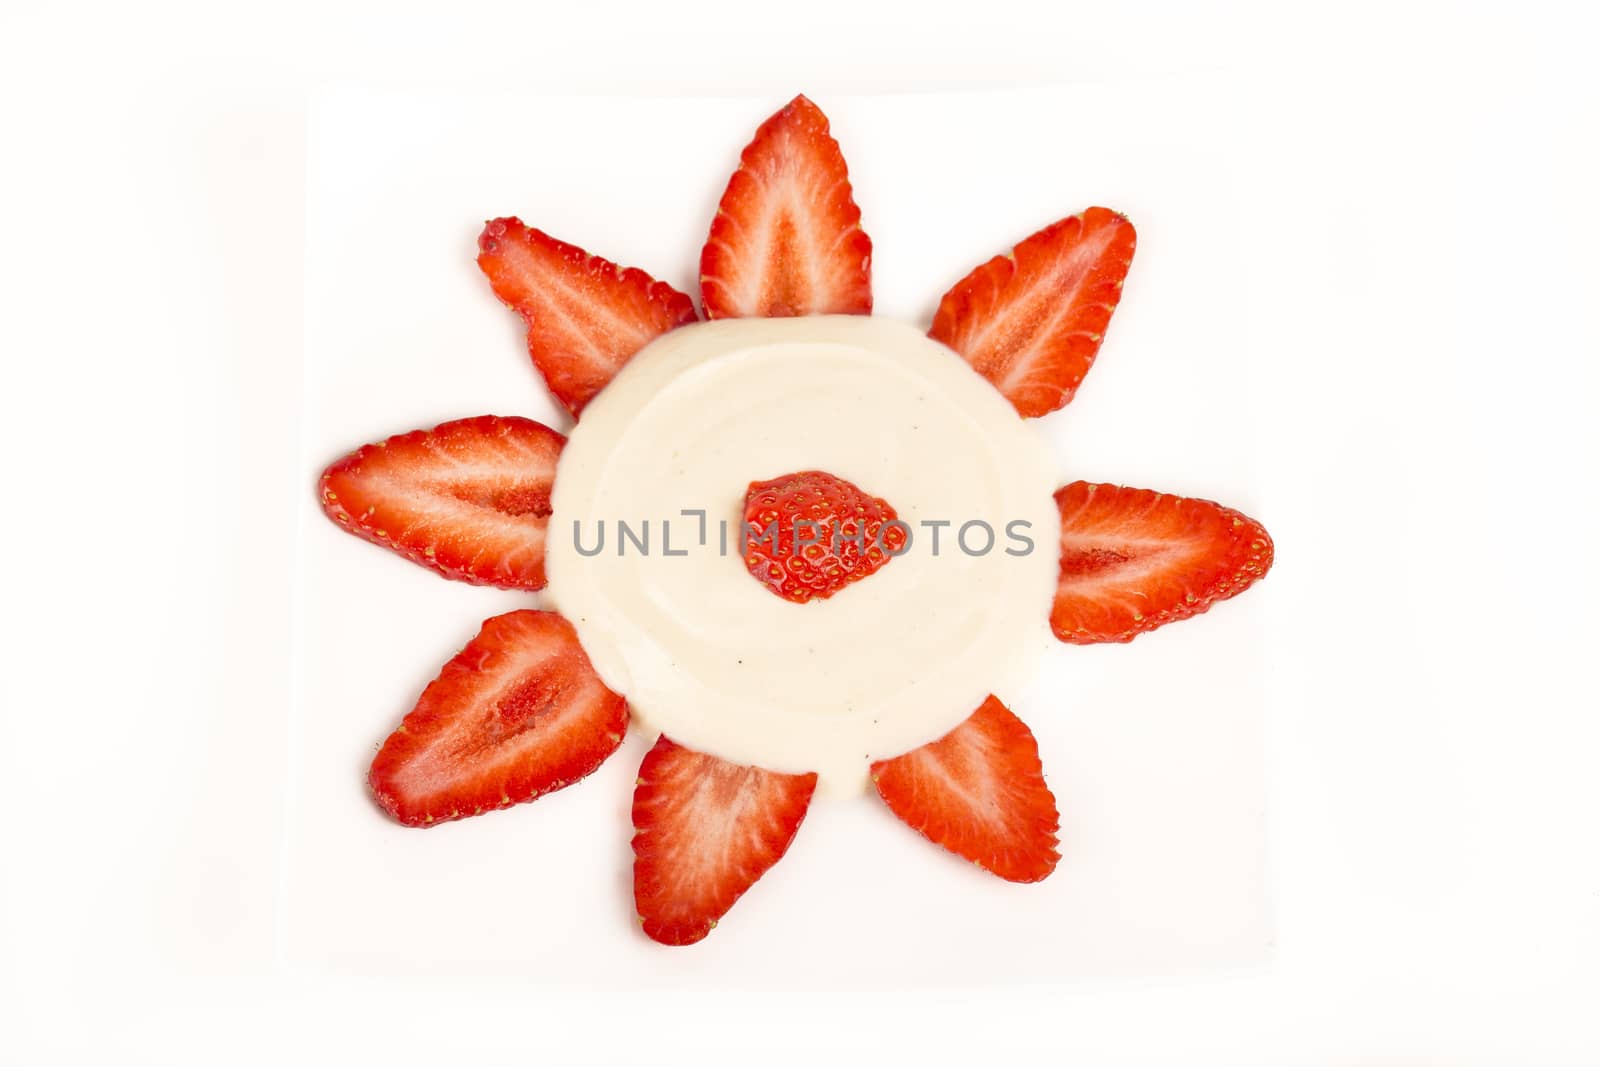 Sun Strawberrues slices with vanilia cream on white background France